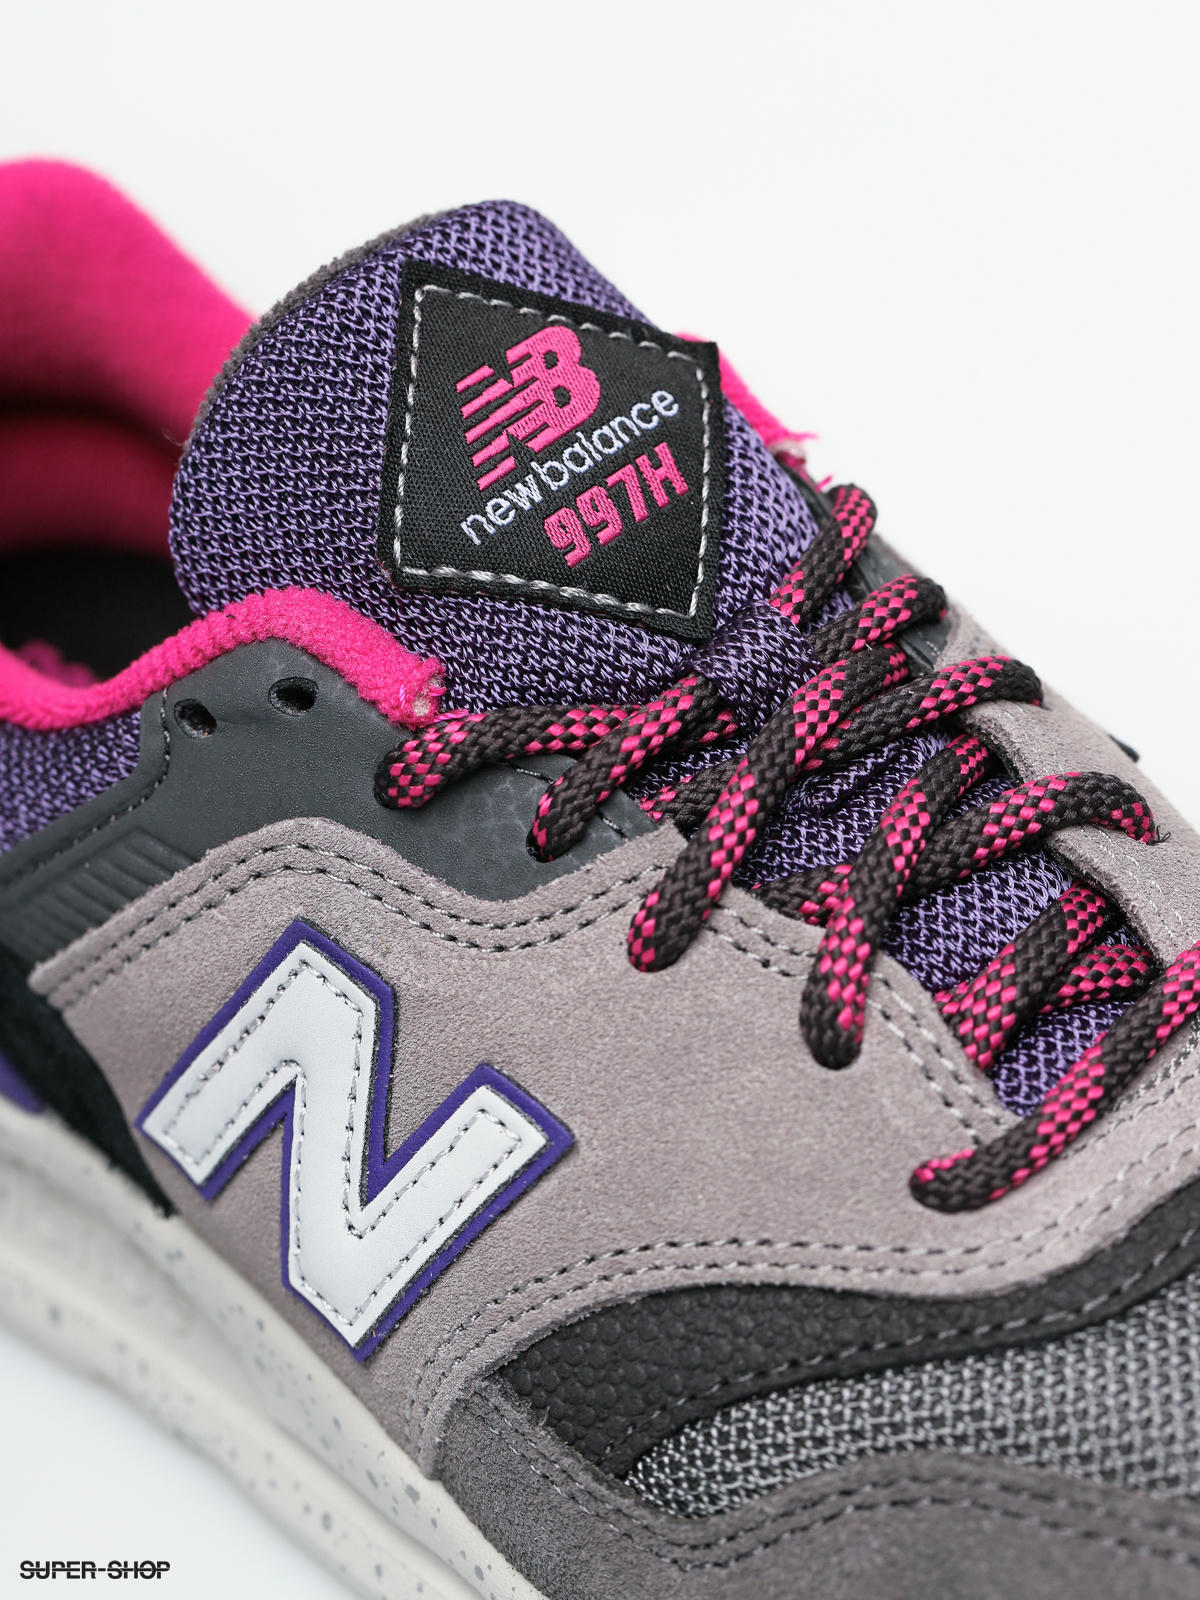 rijk Zelfgenoegzaamheid marge New Balance 997 Shoes Wmn (grey/purple)